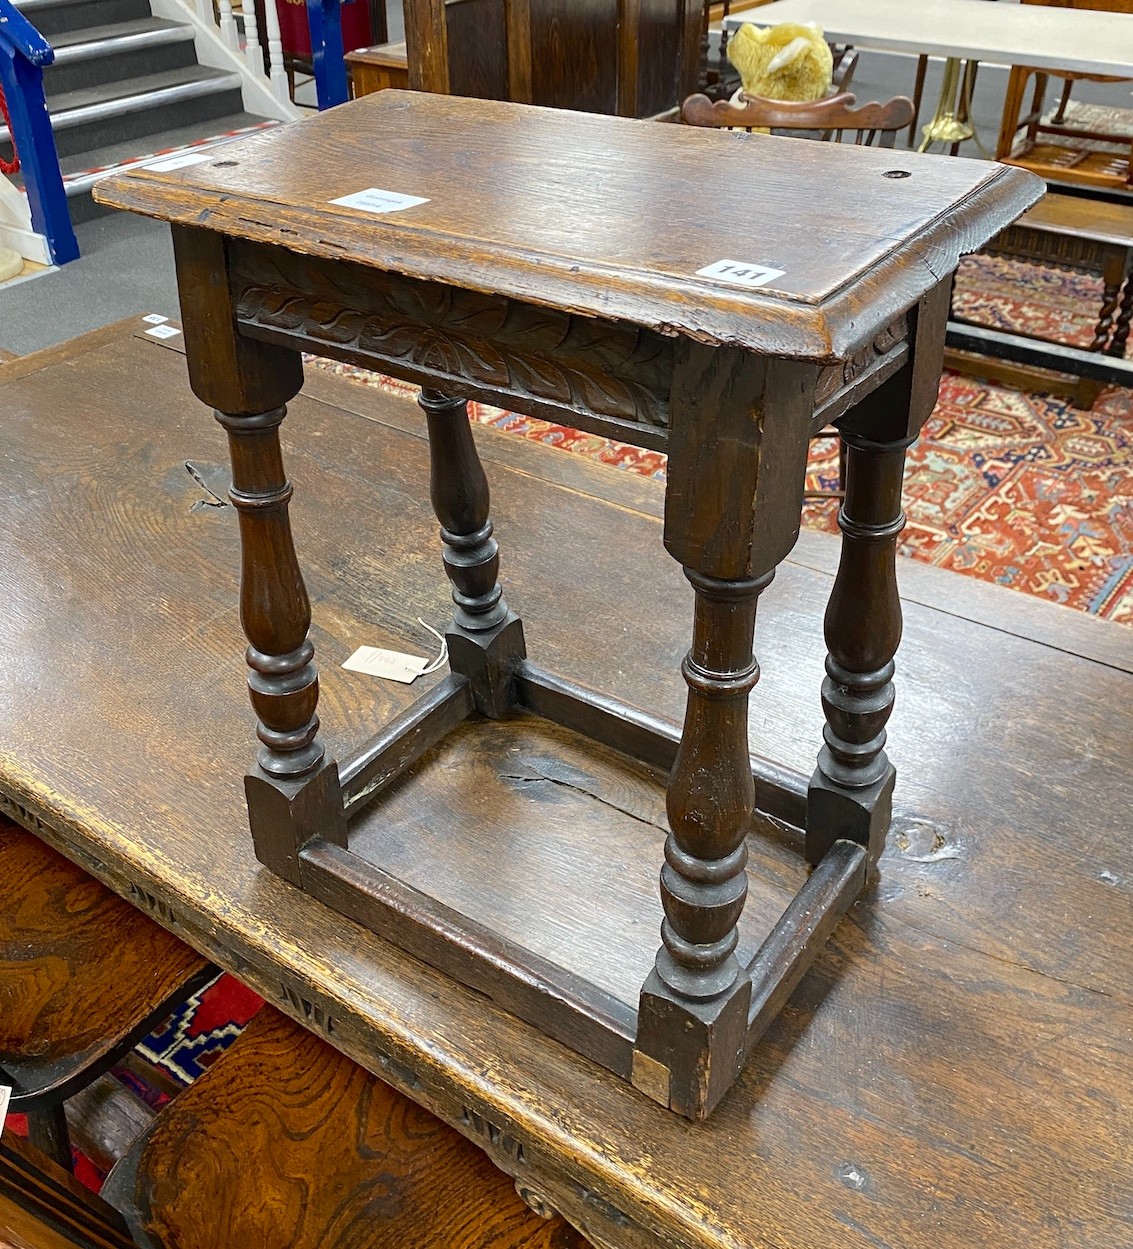 A 17th century style oak joint stool, width 45cm, depth 26cm, height 50cm